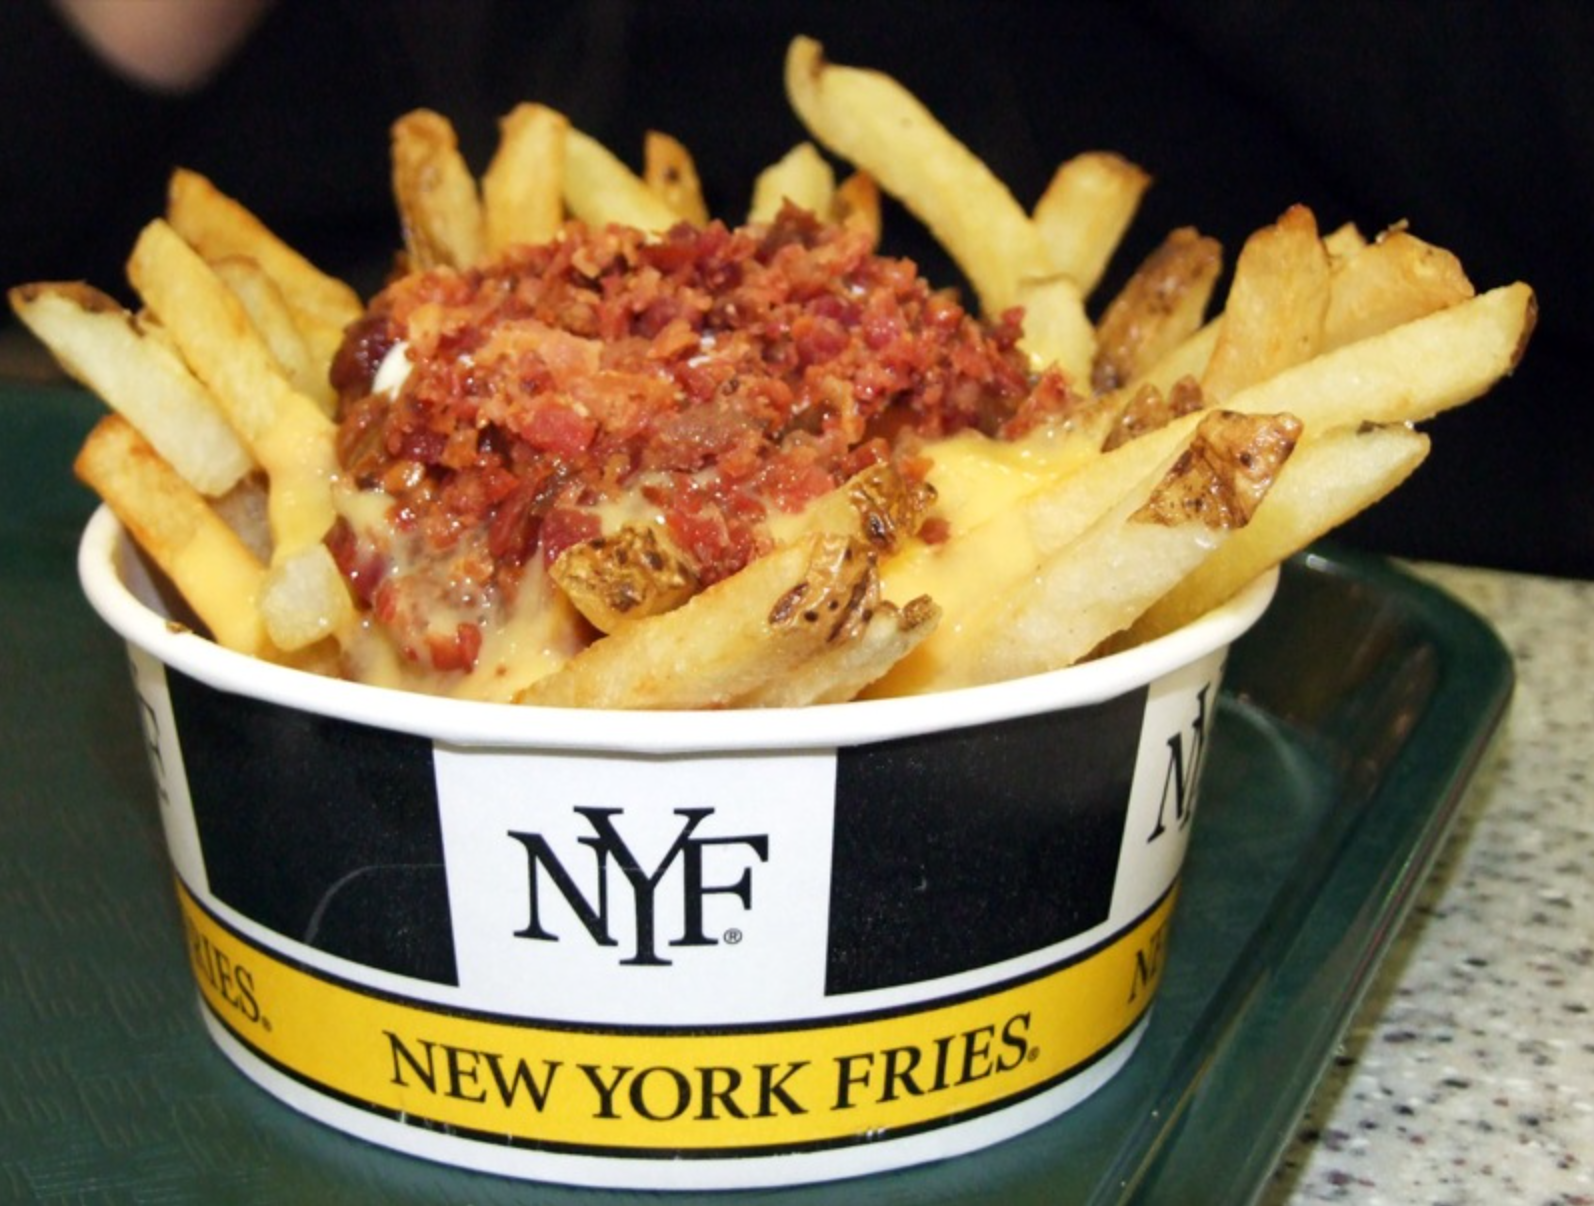 New York fries credit Joseph Novak